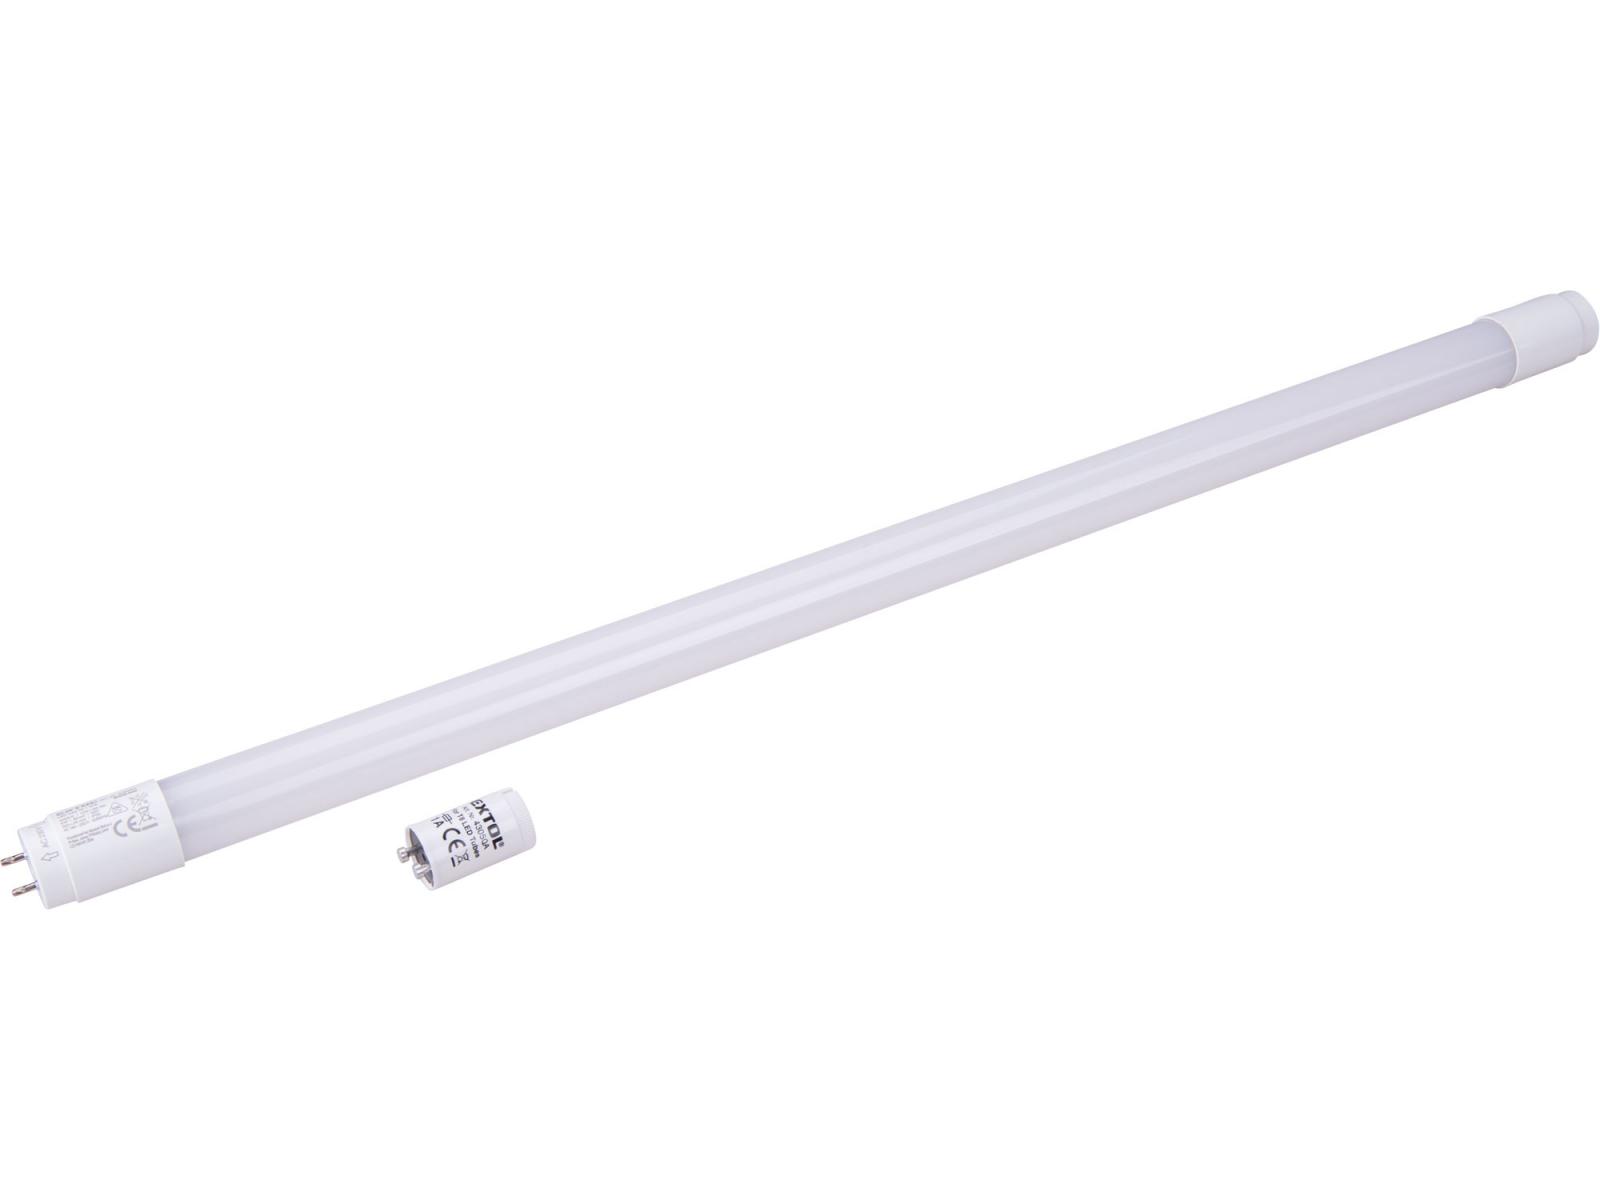 LED trubica T8, 590mm, 9W, 900lm, neutrálna biela 4000K, pätica G13